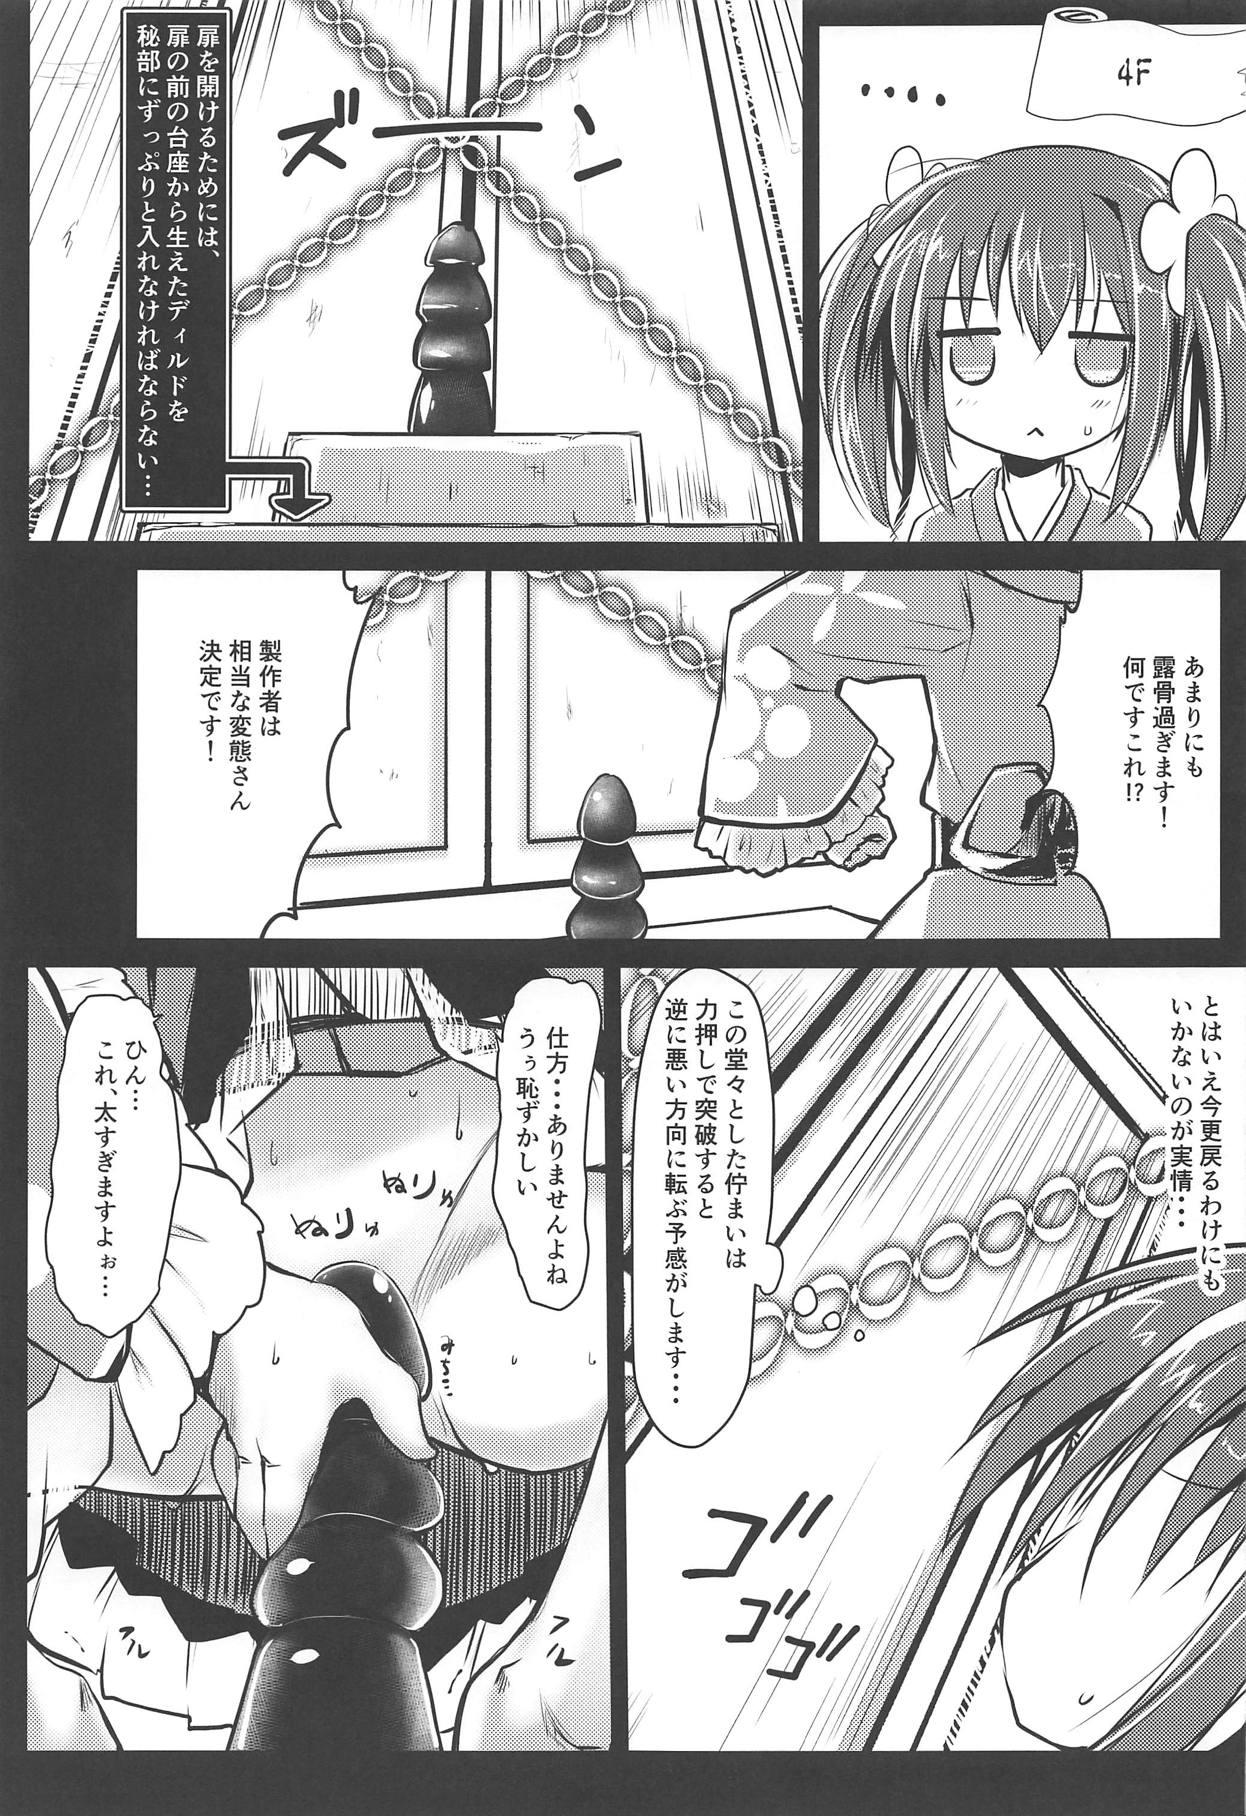 Masterbation Nishikigi VS Ero Trap D - Flower knight girl Nudist - Page 12